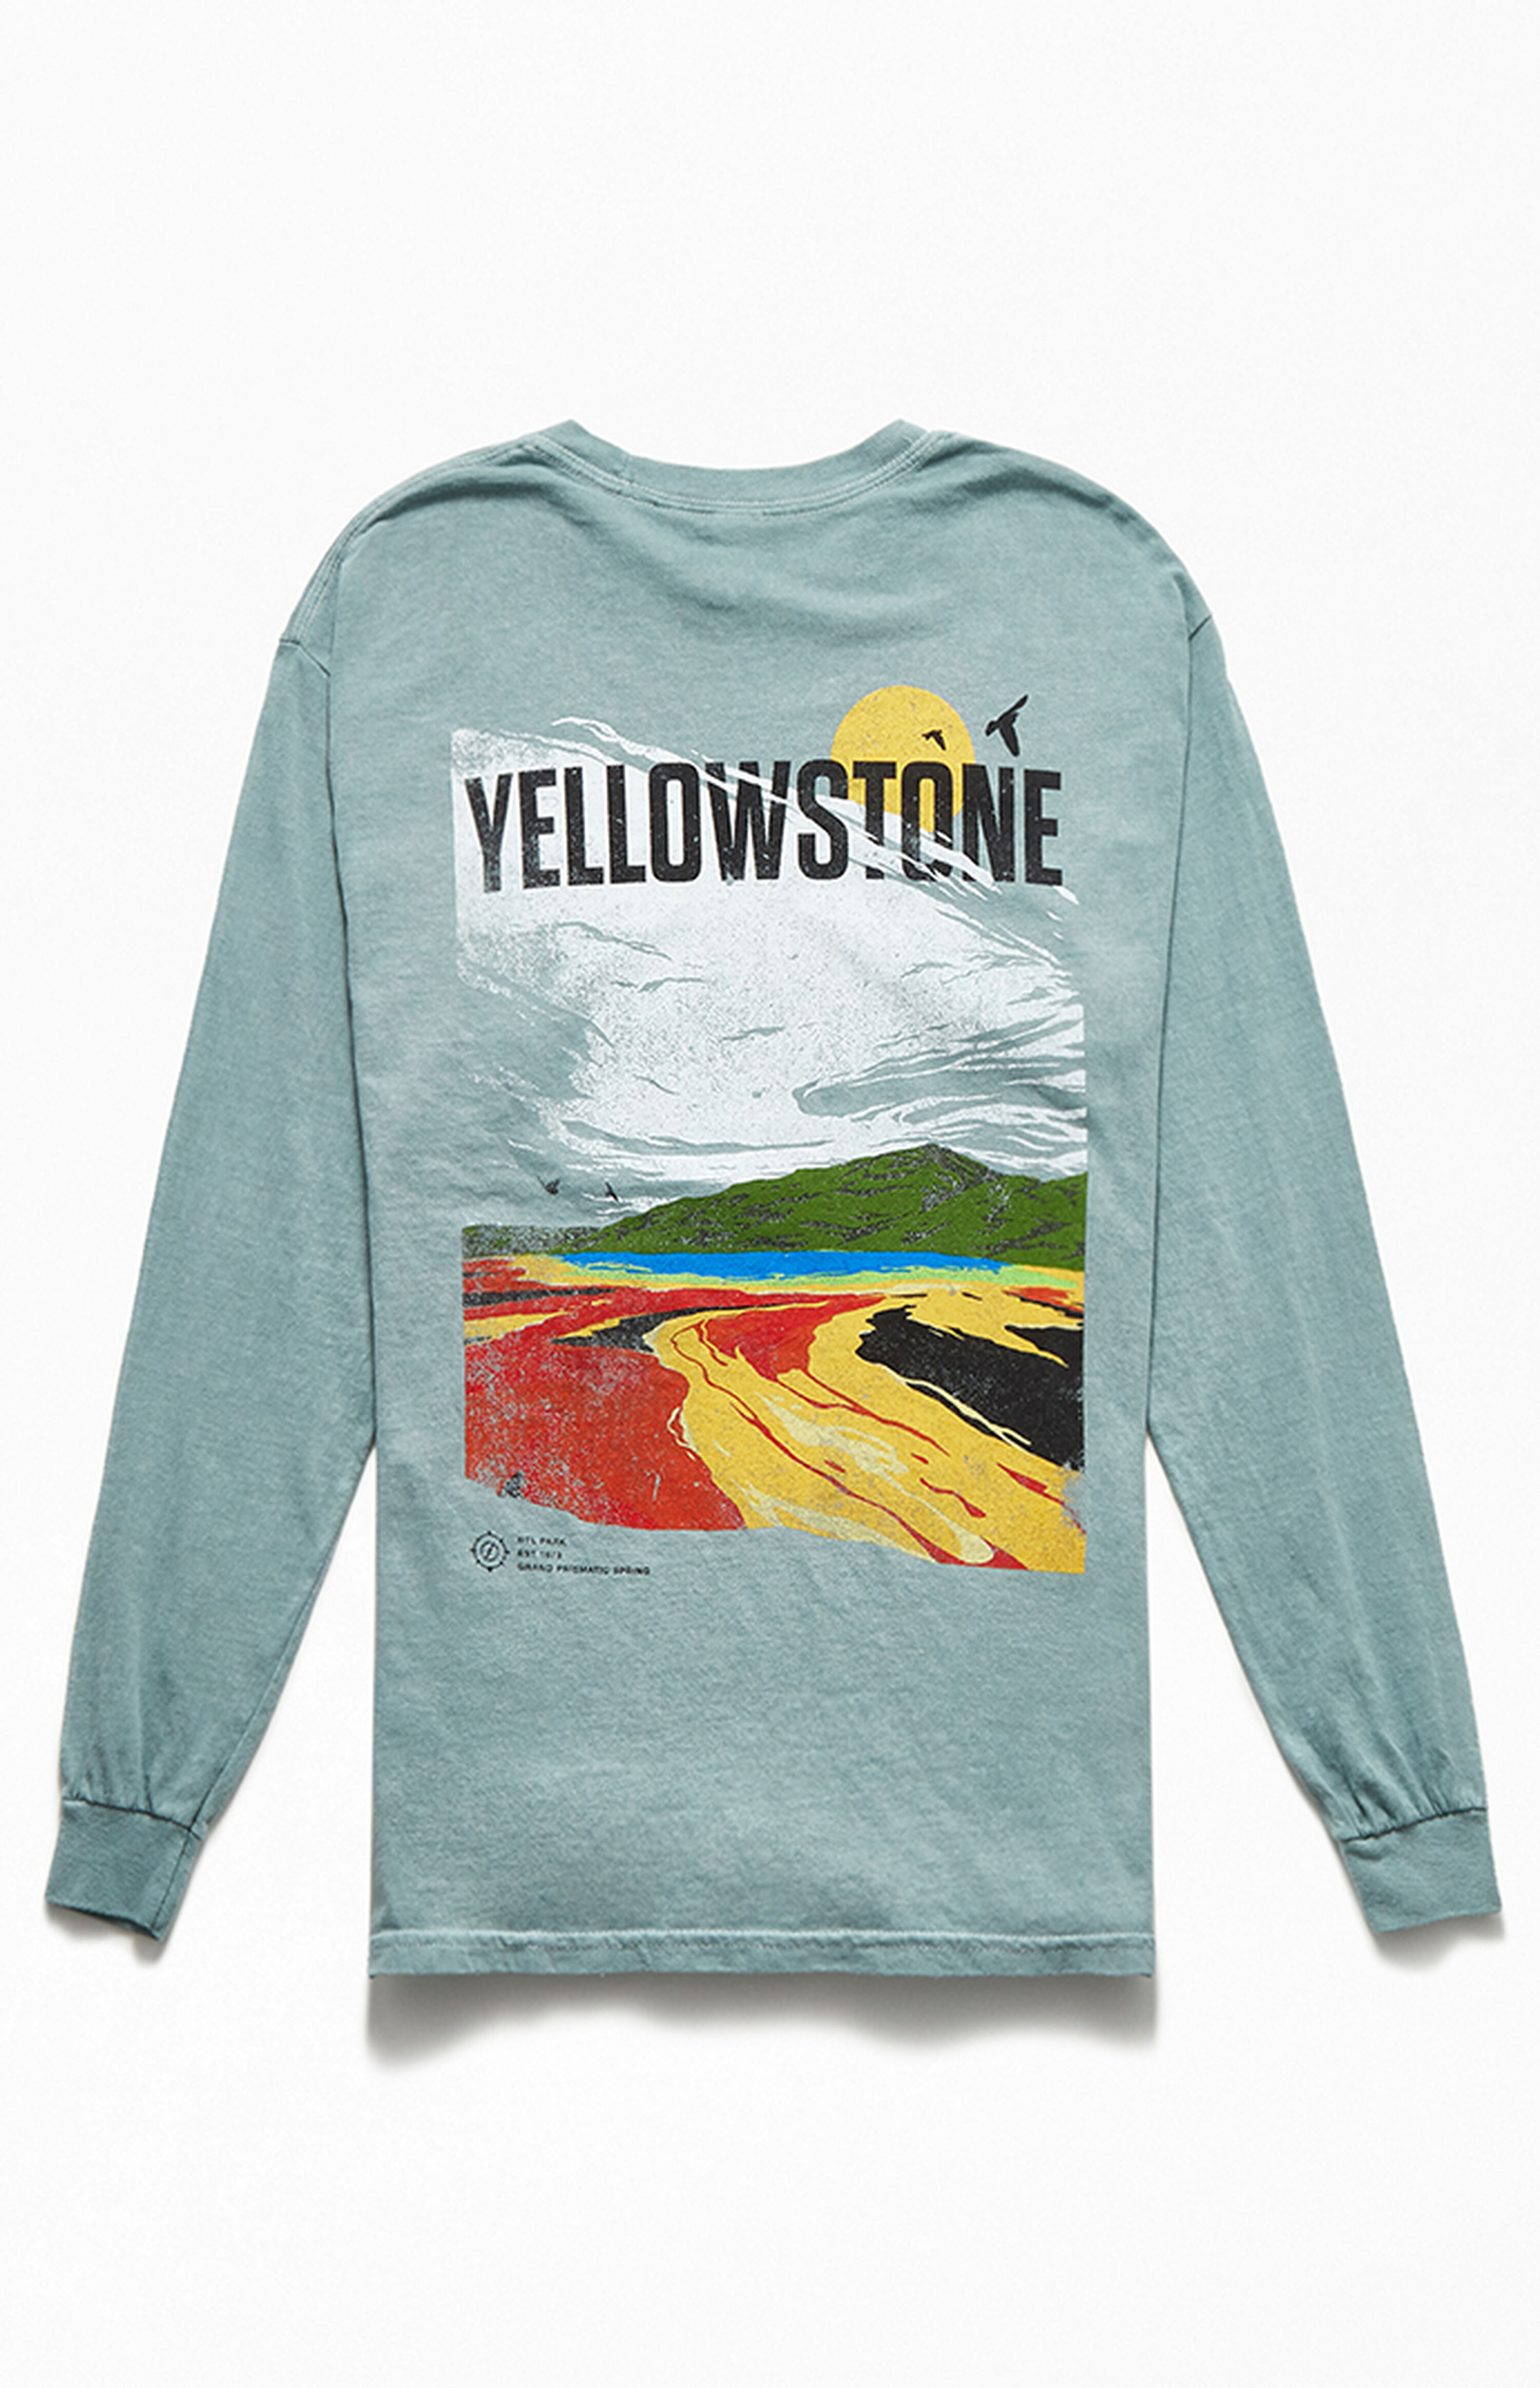 PacSun Yellowstone Vintage Long Sleeve T-Shirt | PacSun